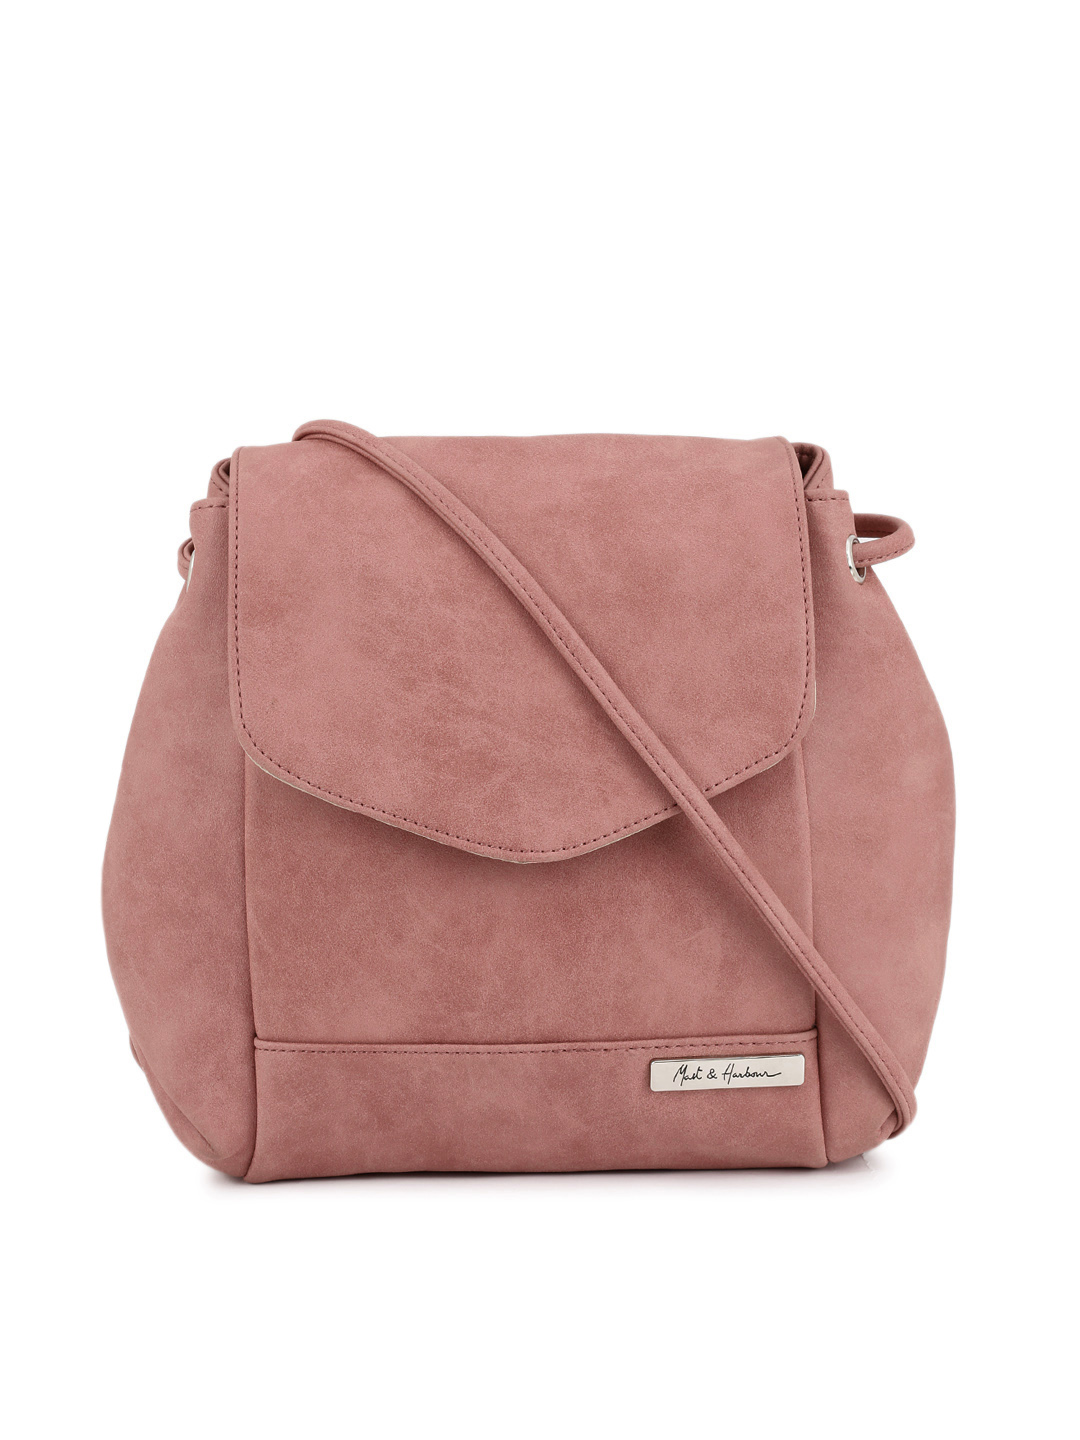 6 Styles of Women’s Handbags: Bag them All!!